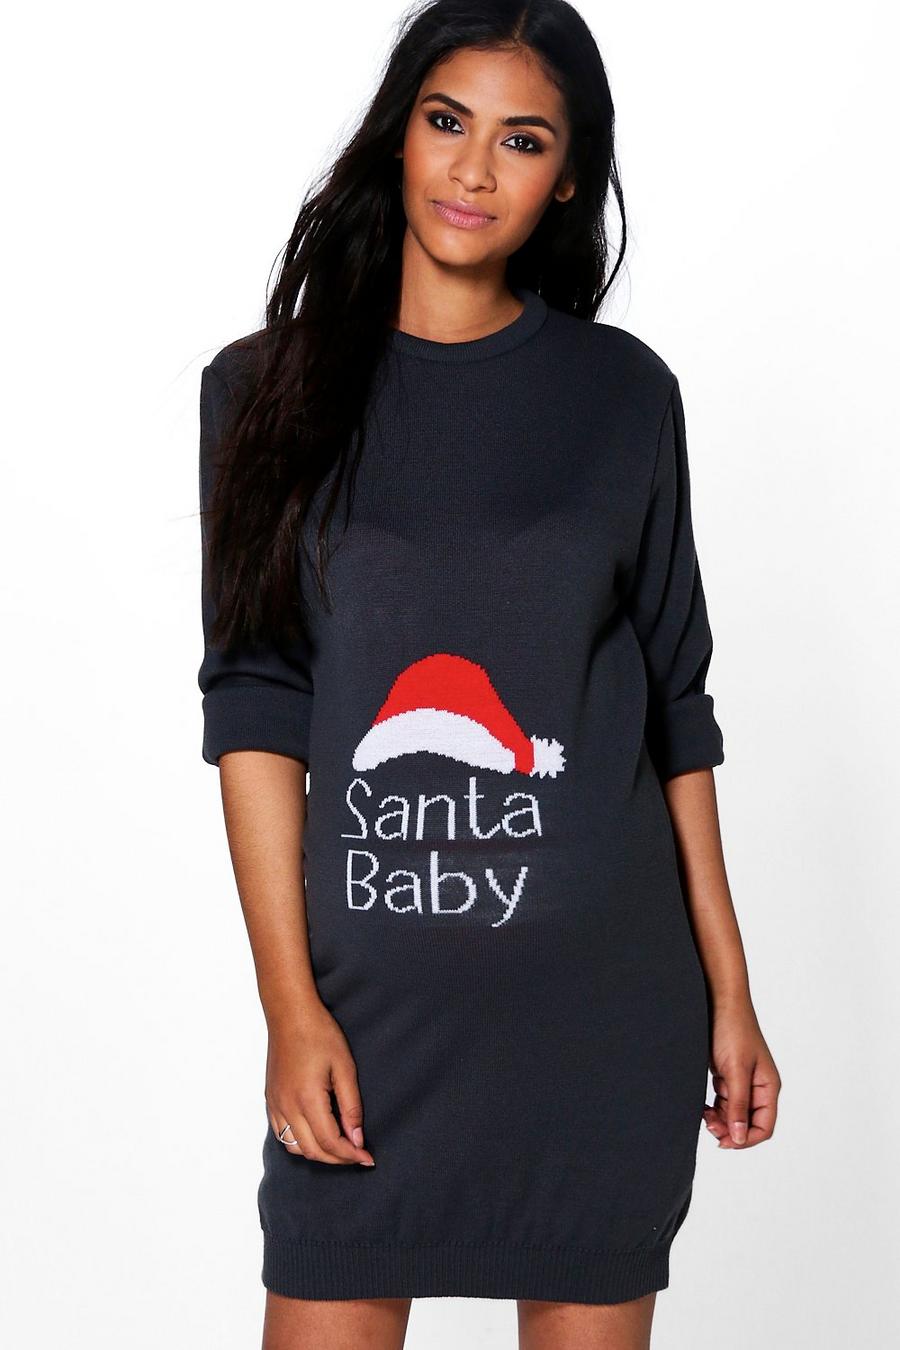 Grey Maternity 'Santa Baby' Christmas Sweater Dress image number 1